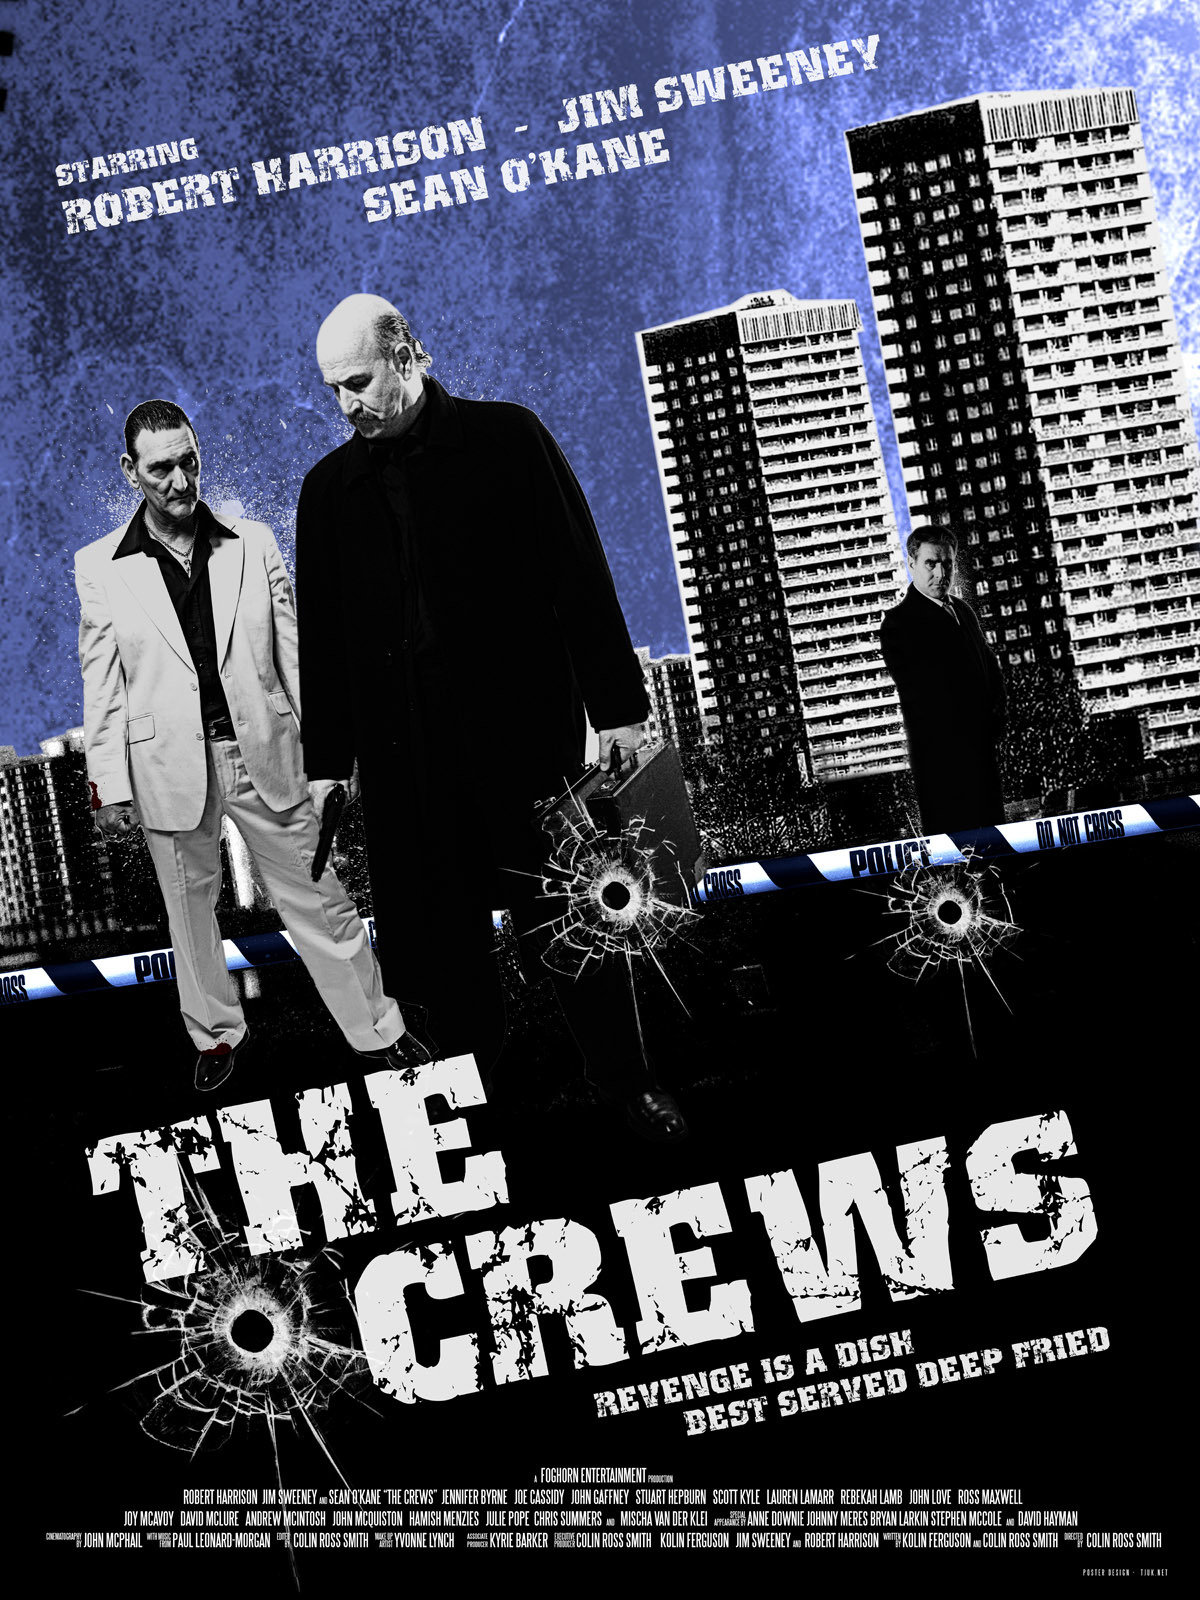 Sean O'Kane, Robert Harrison and Jim Sweeney in The Crews (2011)